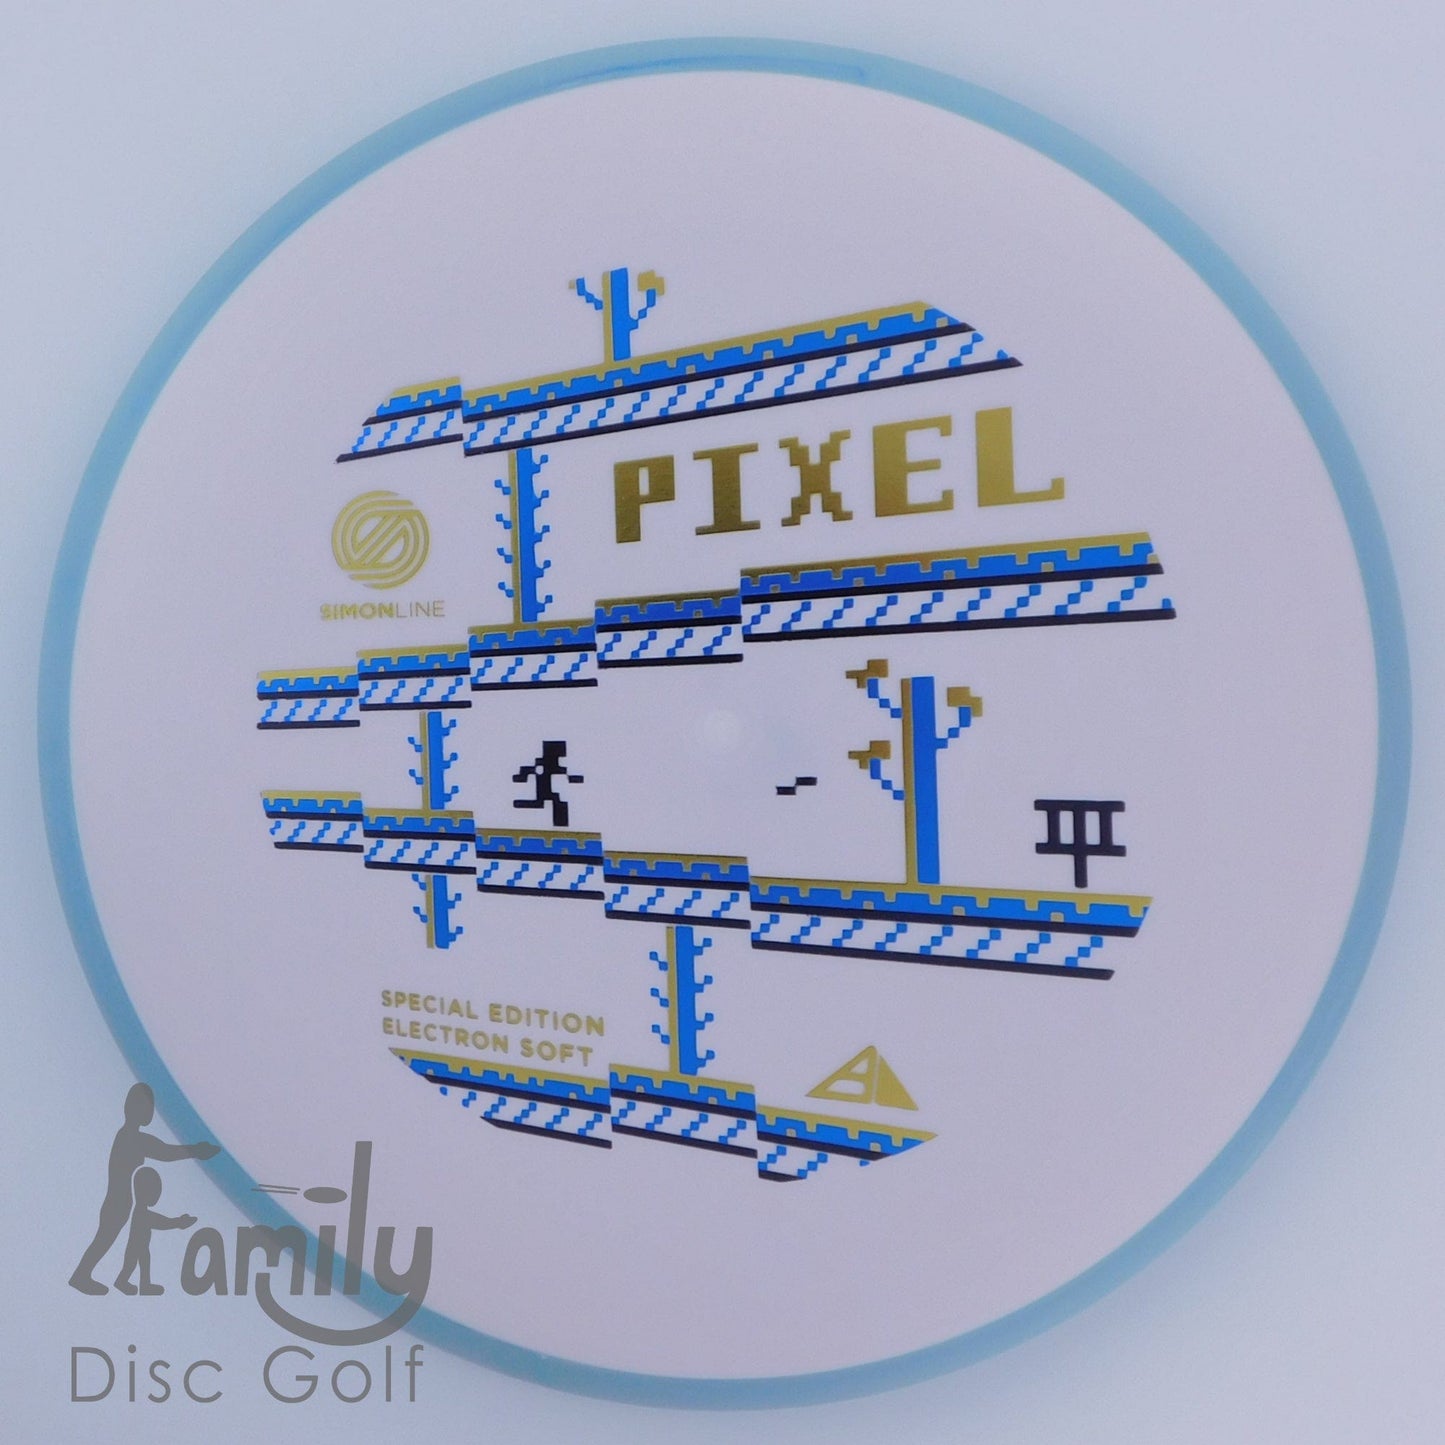 Axiom Pixel - Special Edition - Simon Line - Electron (Soft) 2│4│0│0.5 172.8g - White+Teal - Axiom Pixel - Electron Soft - 101835